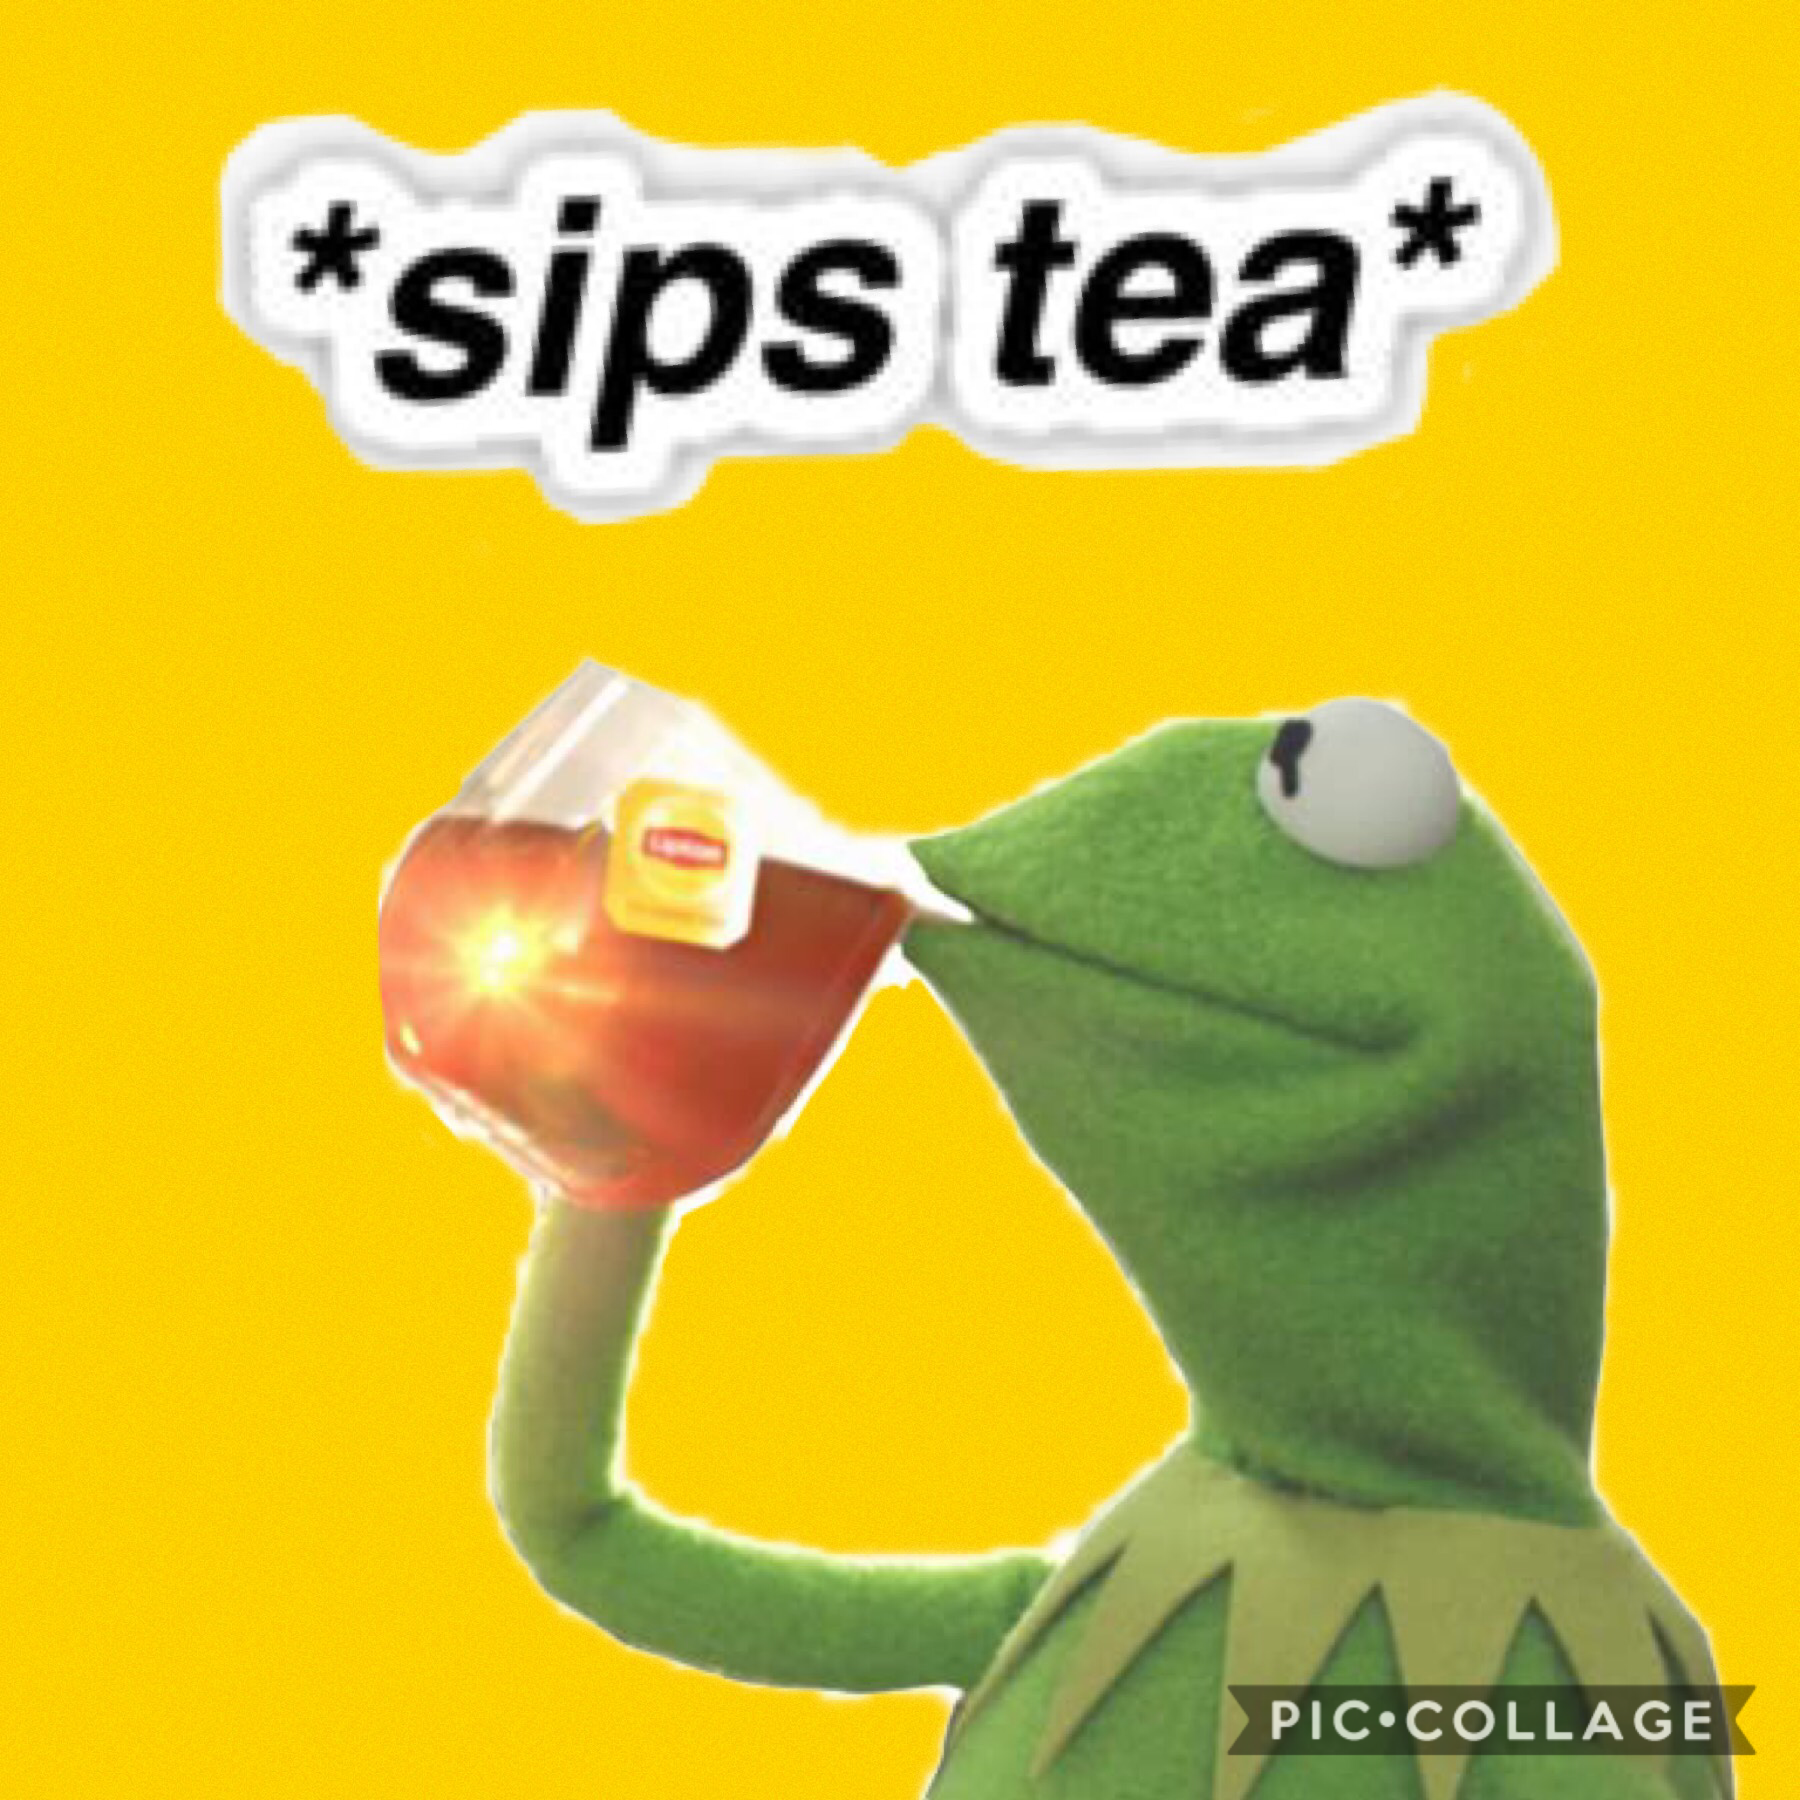 *sips tea*